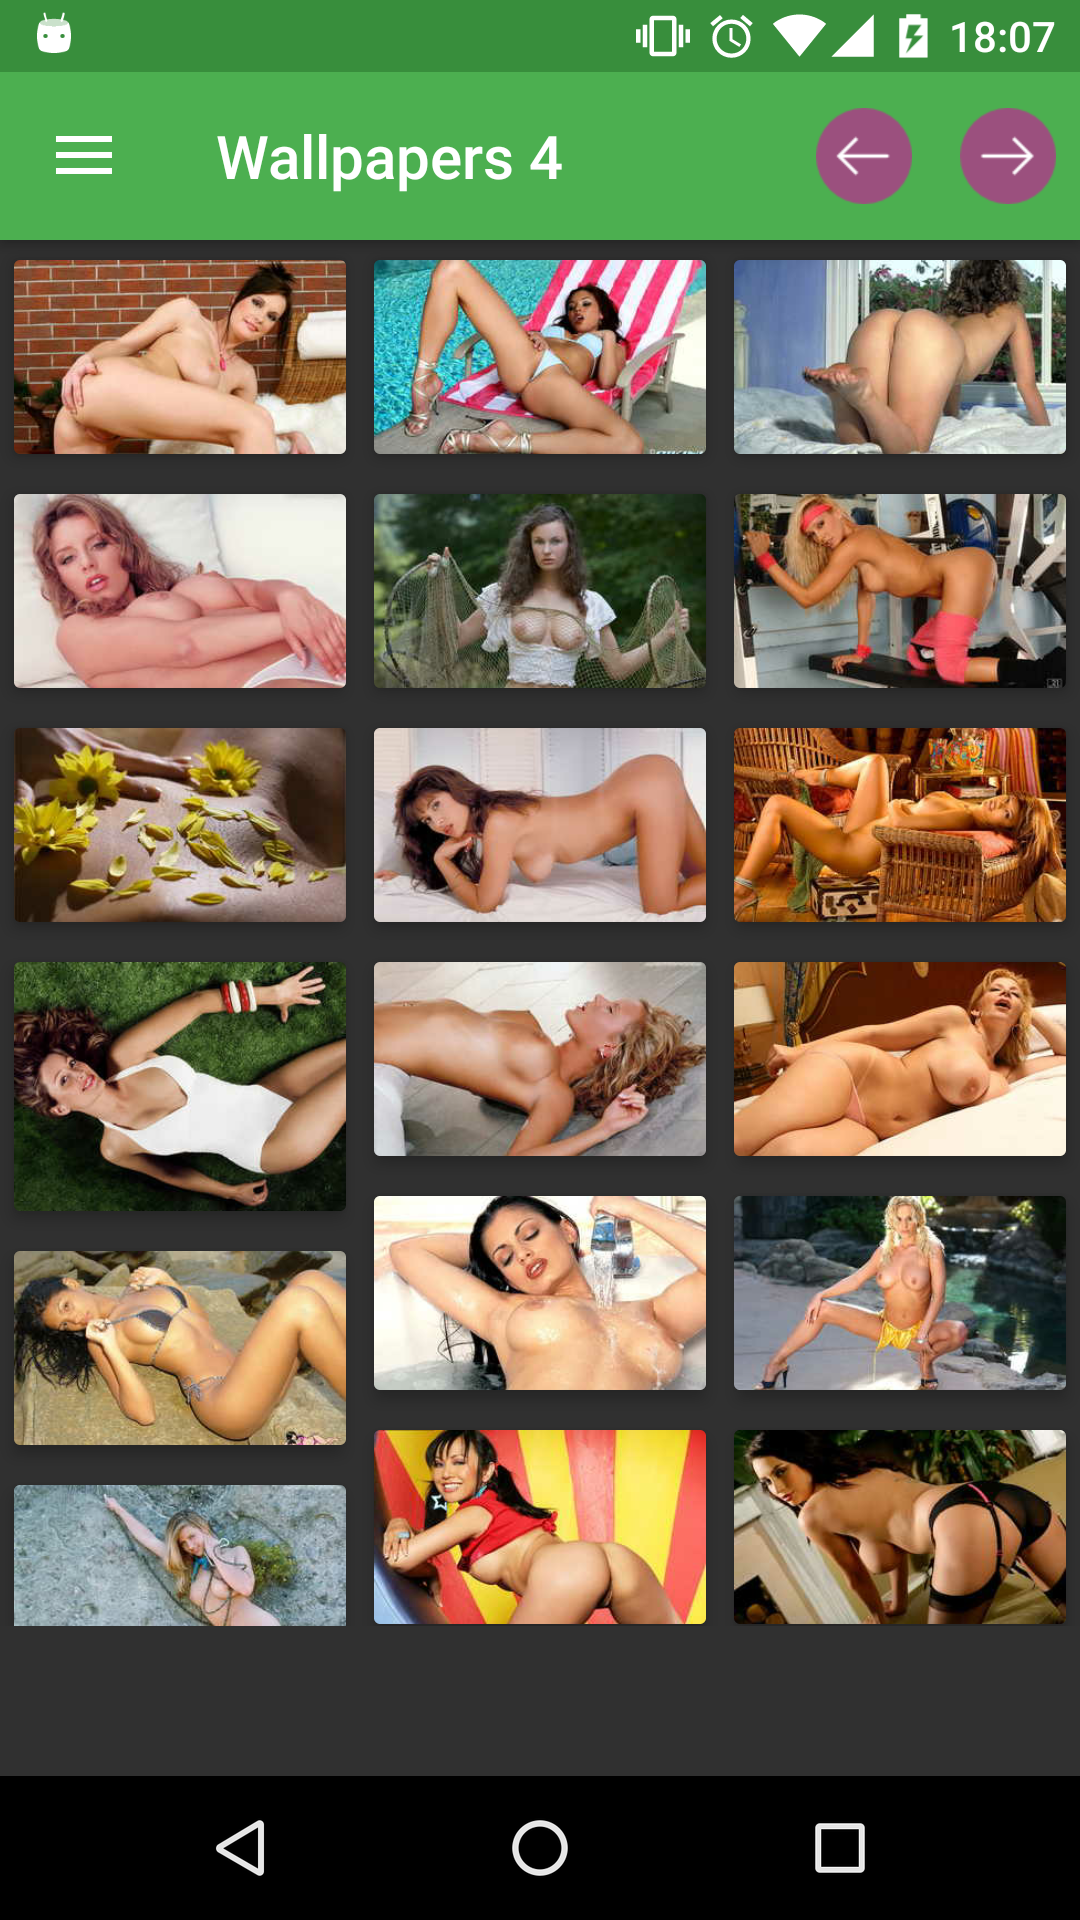 Rx Erotic Wallpapers pictures,bisexpics,app,apk,download,mainichi,backgrounds,anime,sexy,porn,hentai,erotic,pics,apps,anoko,galleries,henati,best,wallpapers,pic